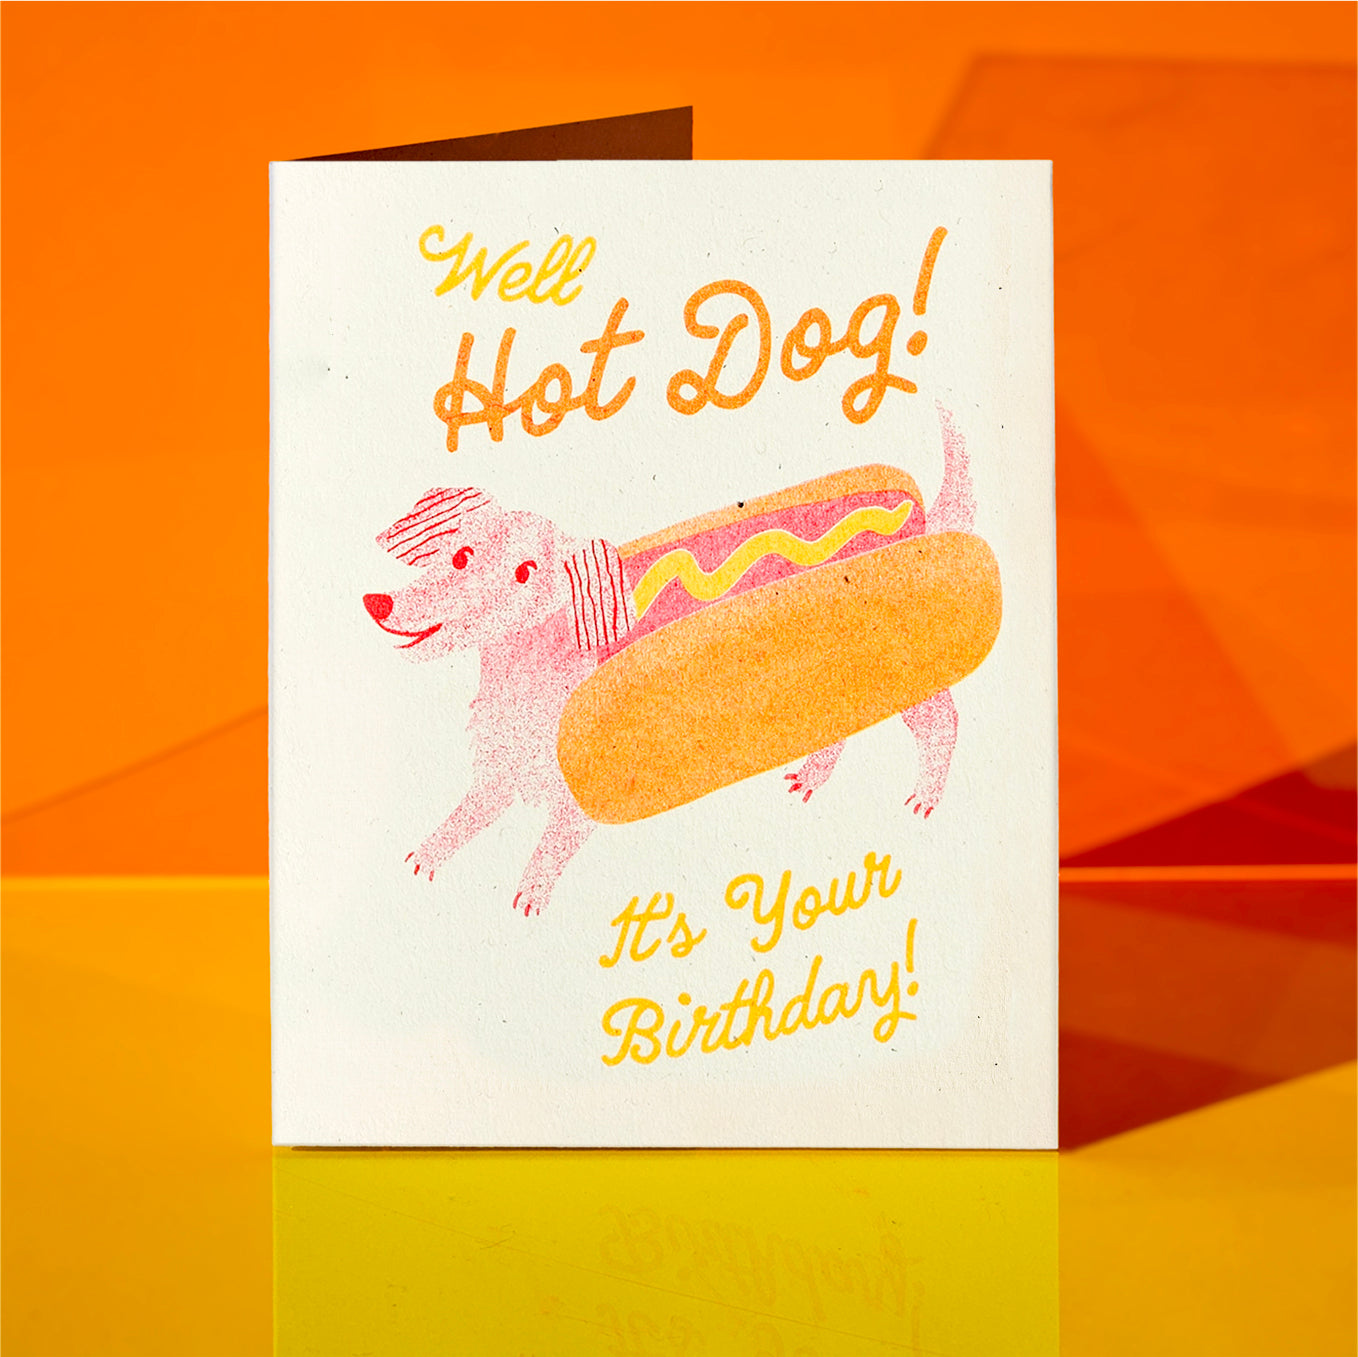 Hot Dog - Risograph Birthday Card